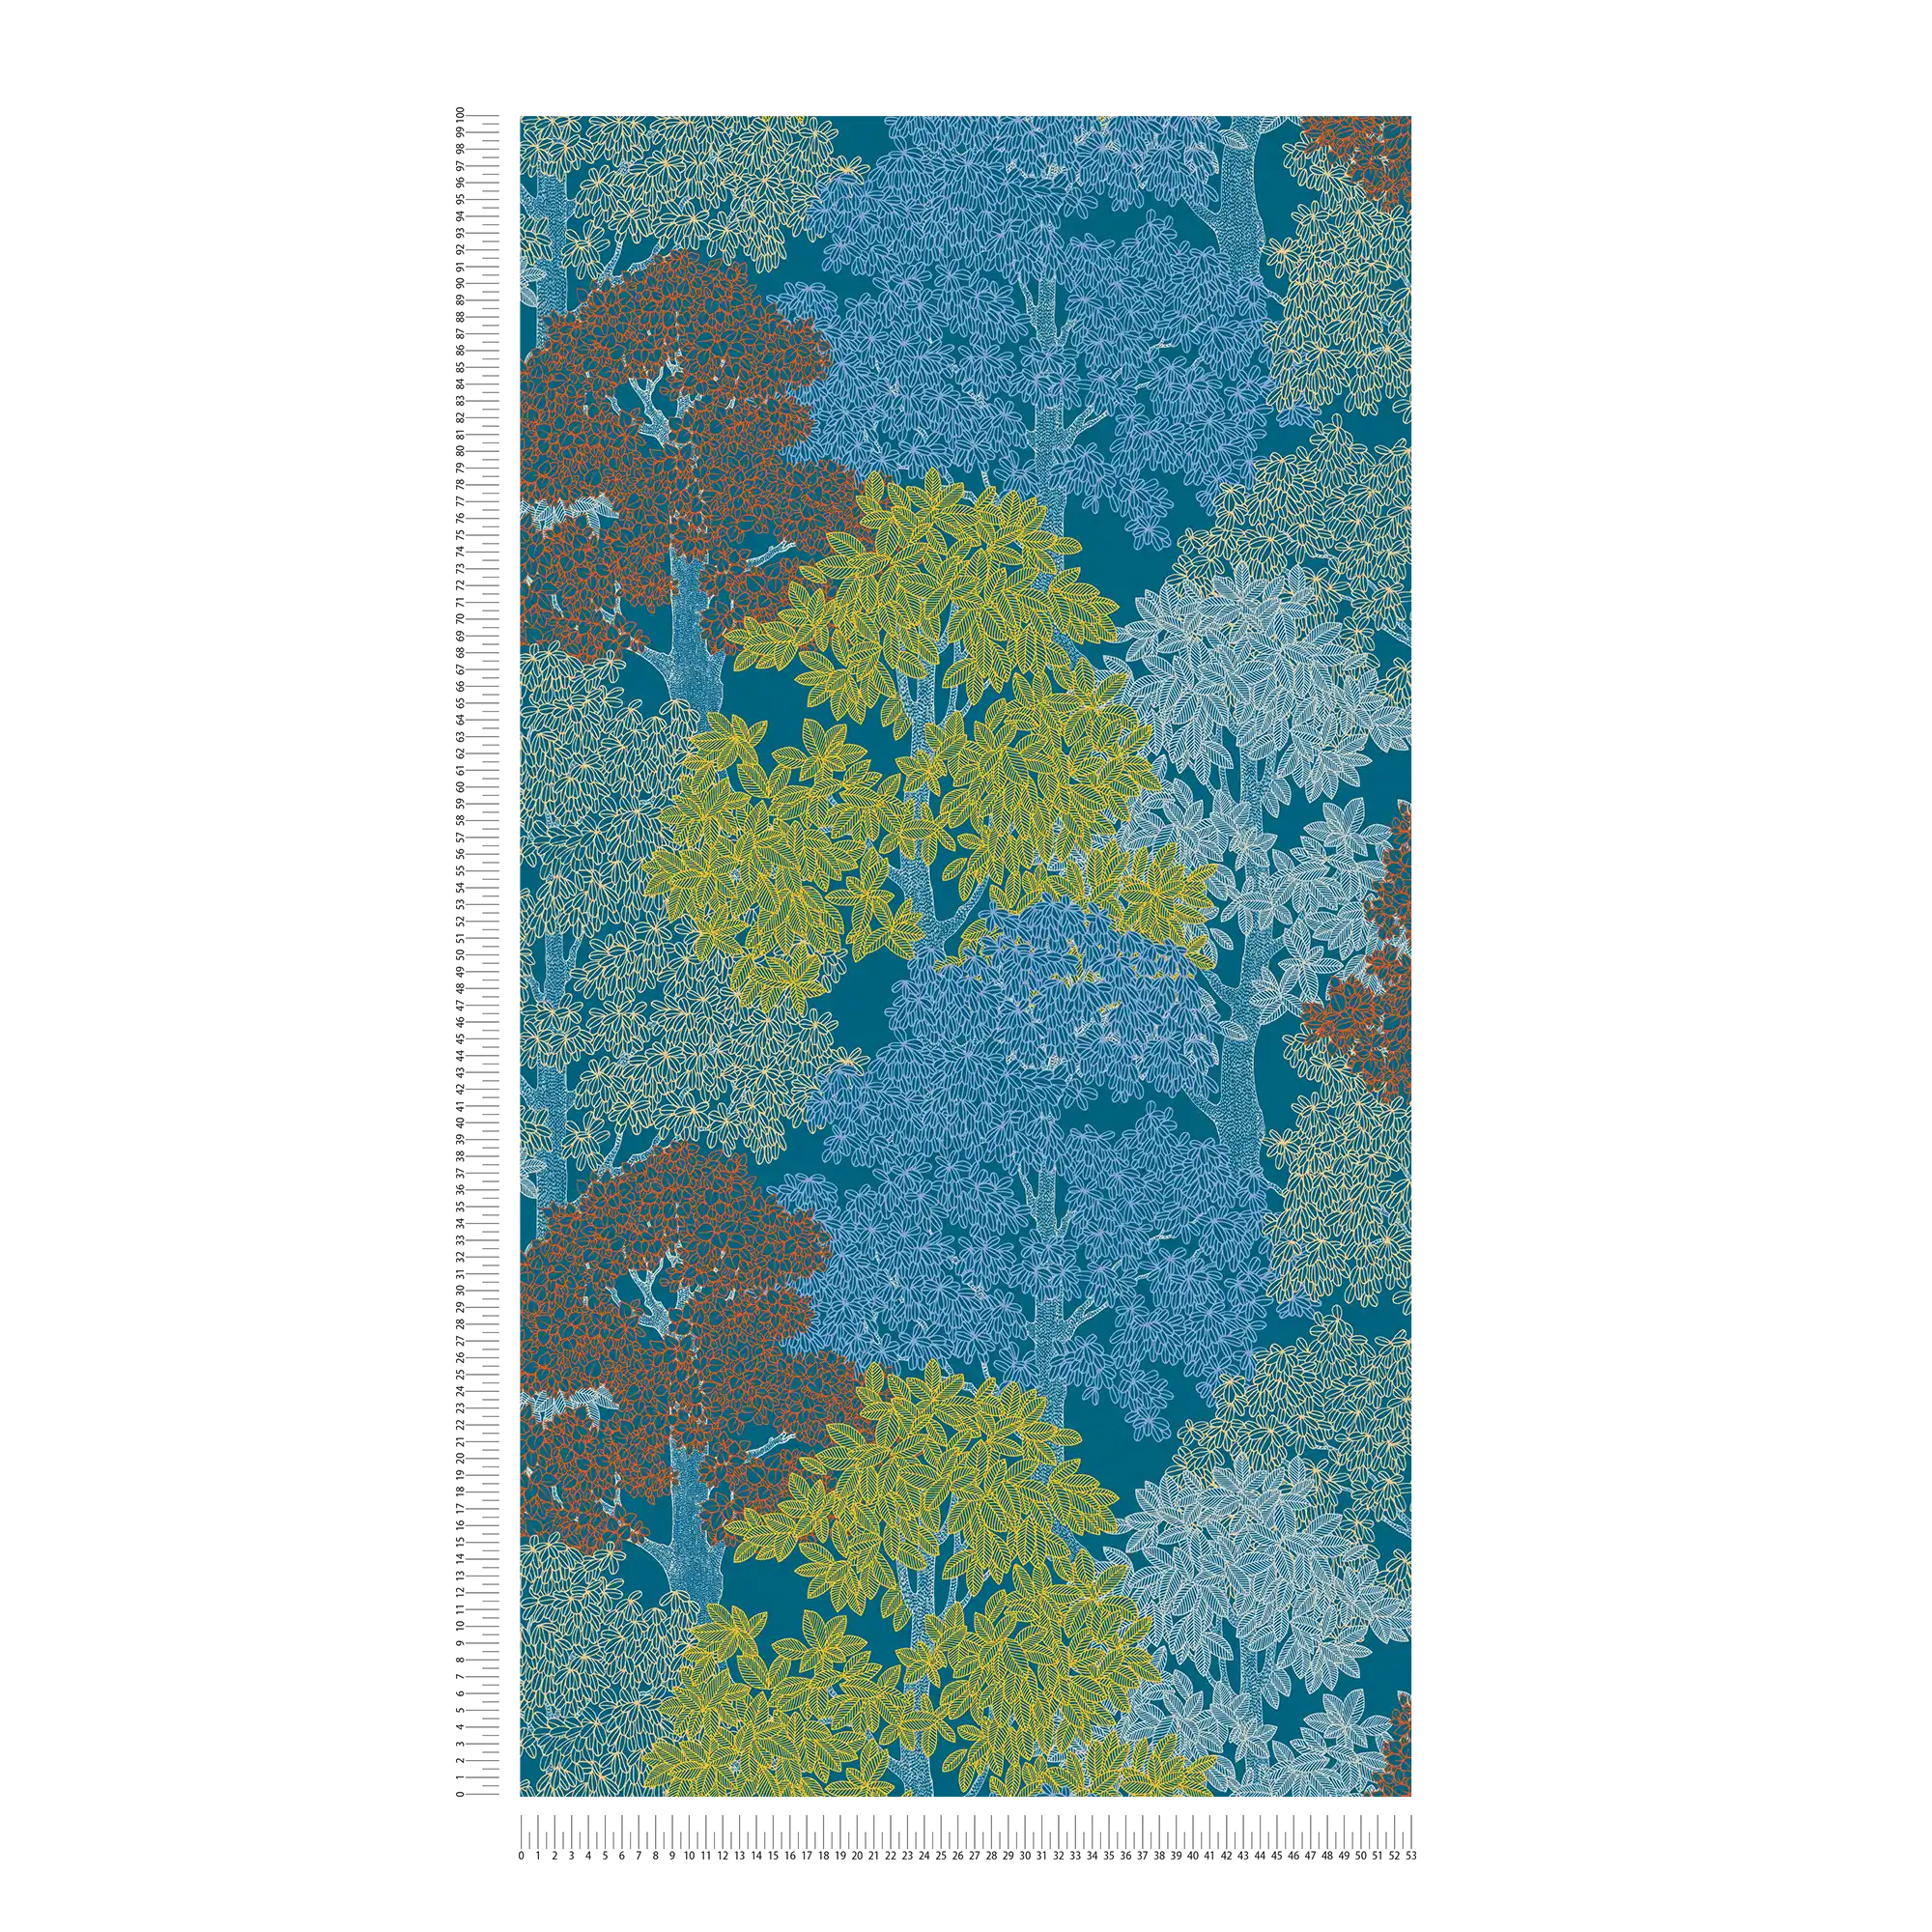             wallpaper trees pattern in Scandinavian style - blue, yellow, red
        